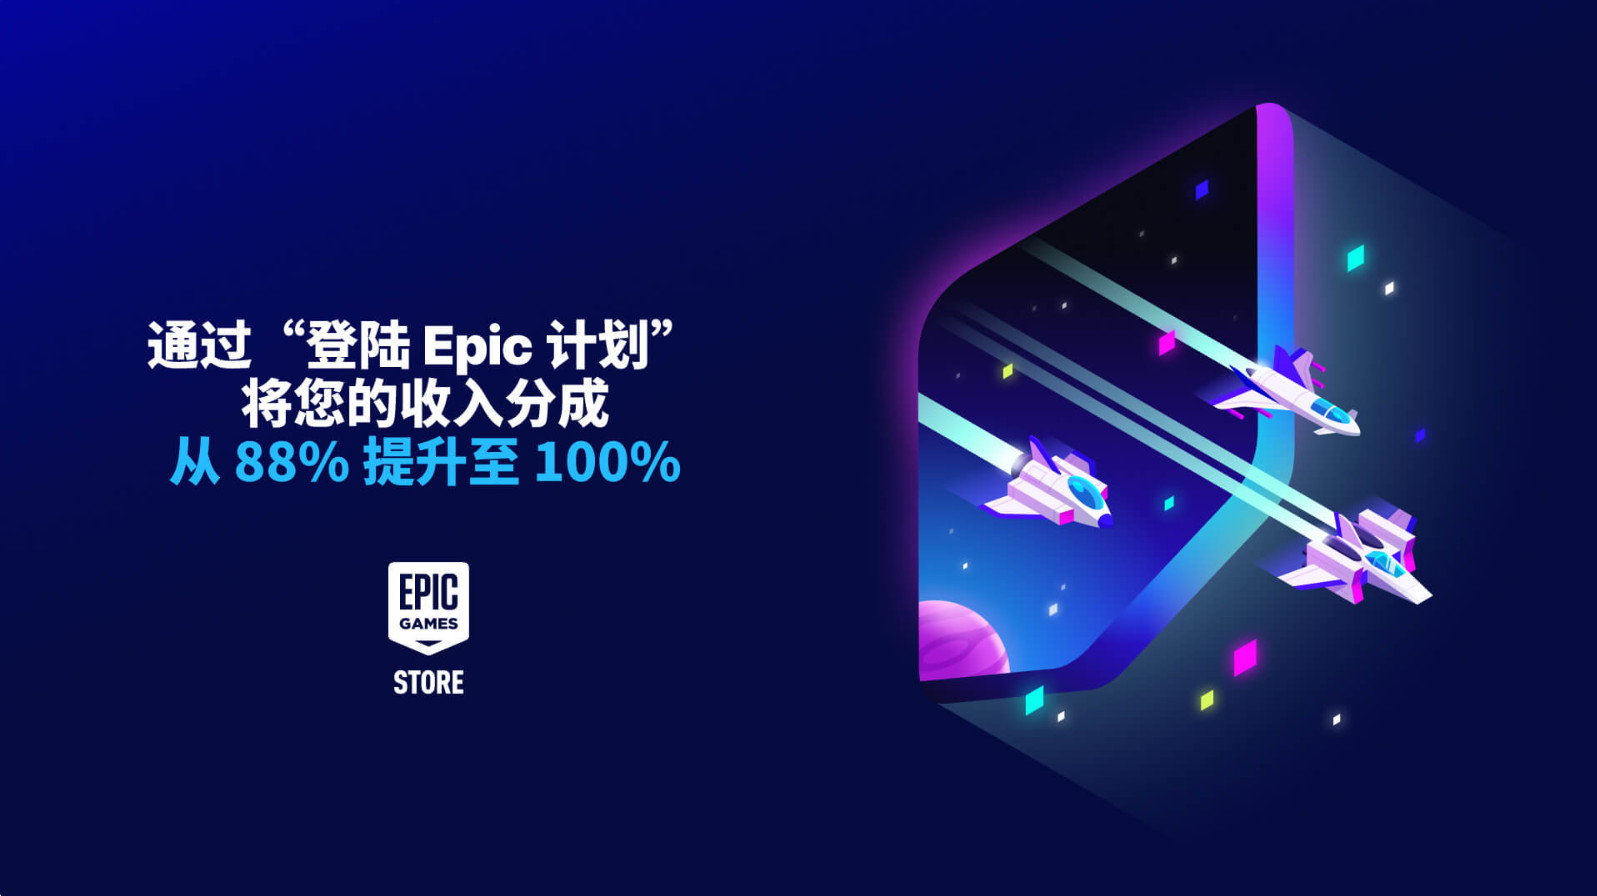 Epic又推新政策”Epic始发“：携老游戏回归 前六个月获100%收入分成